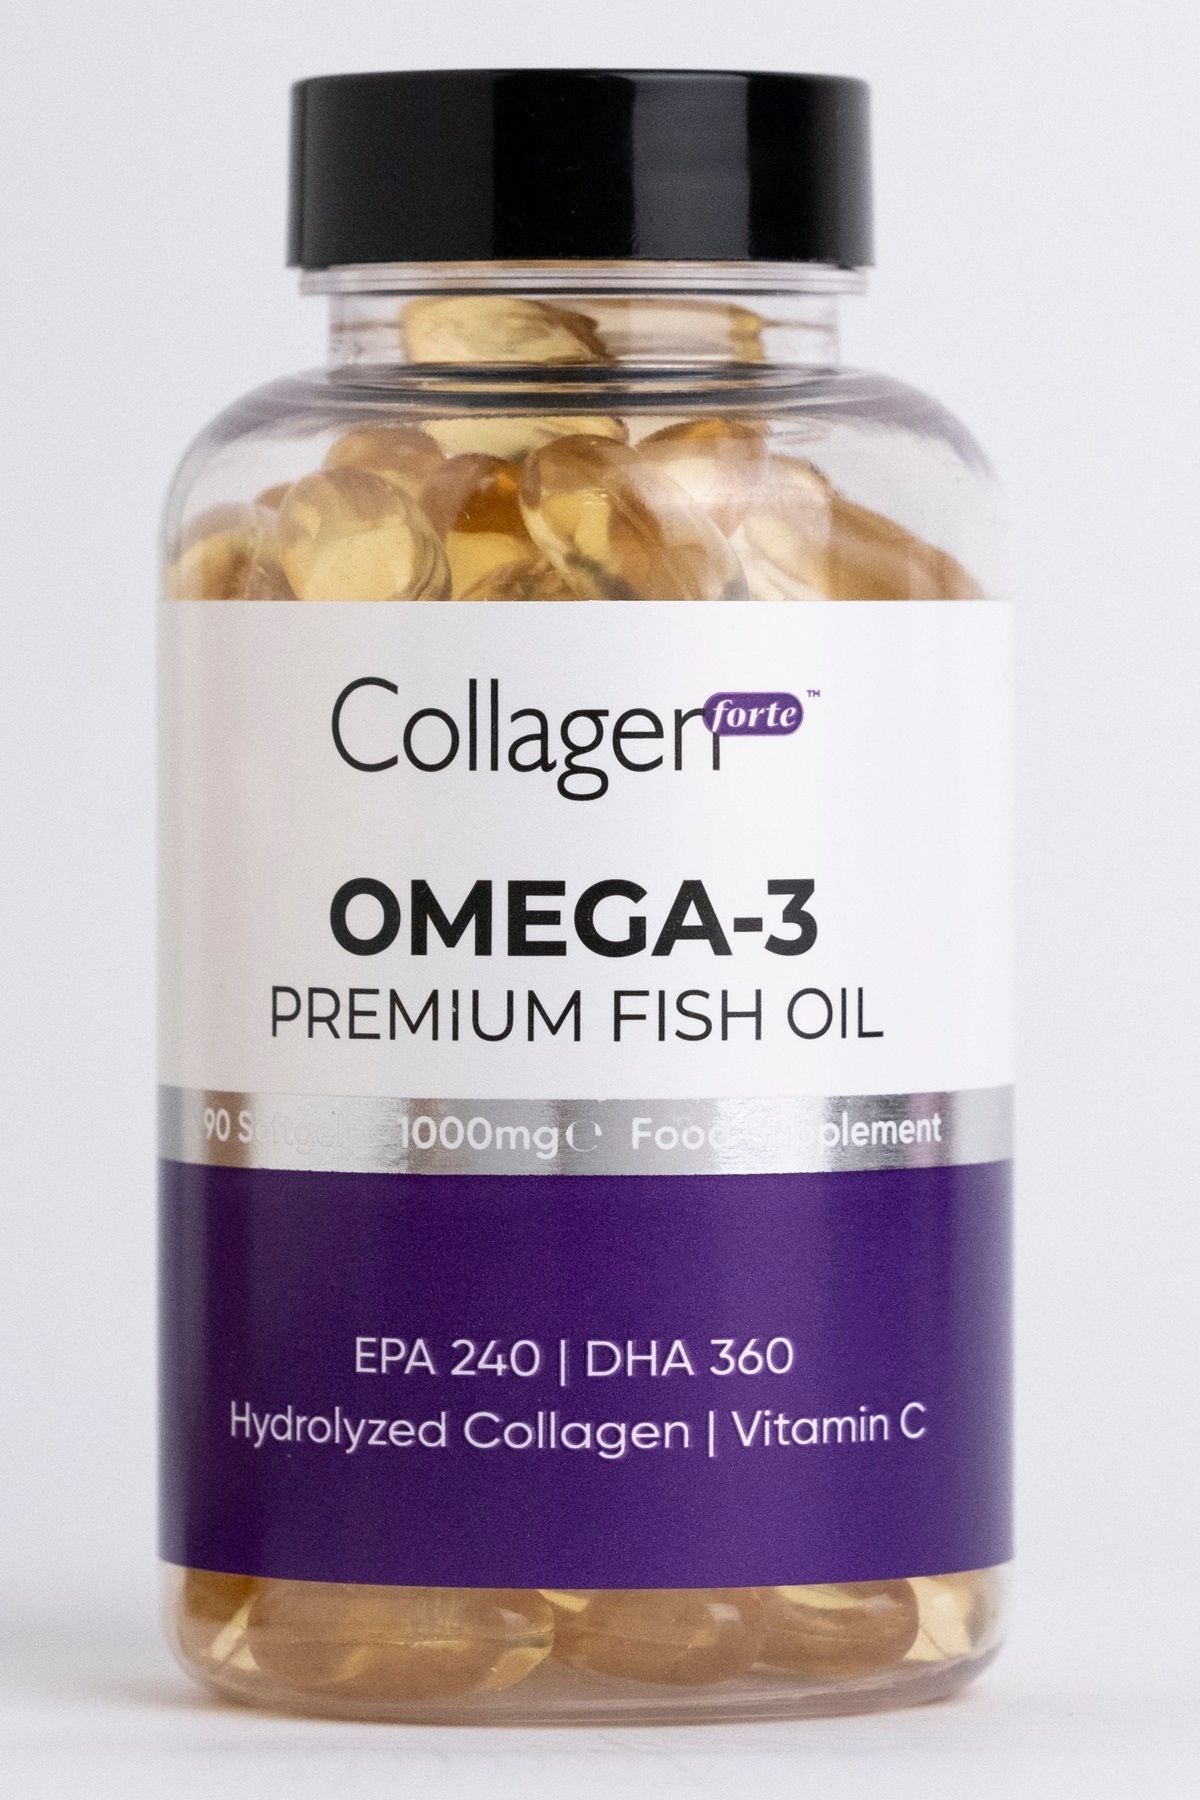 Collagen Forte Platinum Omega-3 Premium Fish Oil 90 Softgel X 1000mg, Balık Yağı, Hidrolize Kolajen & Vitamin C